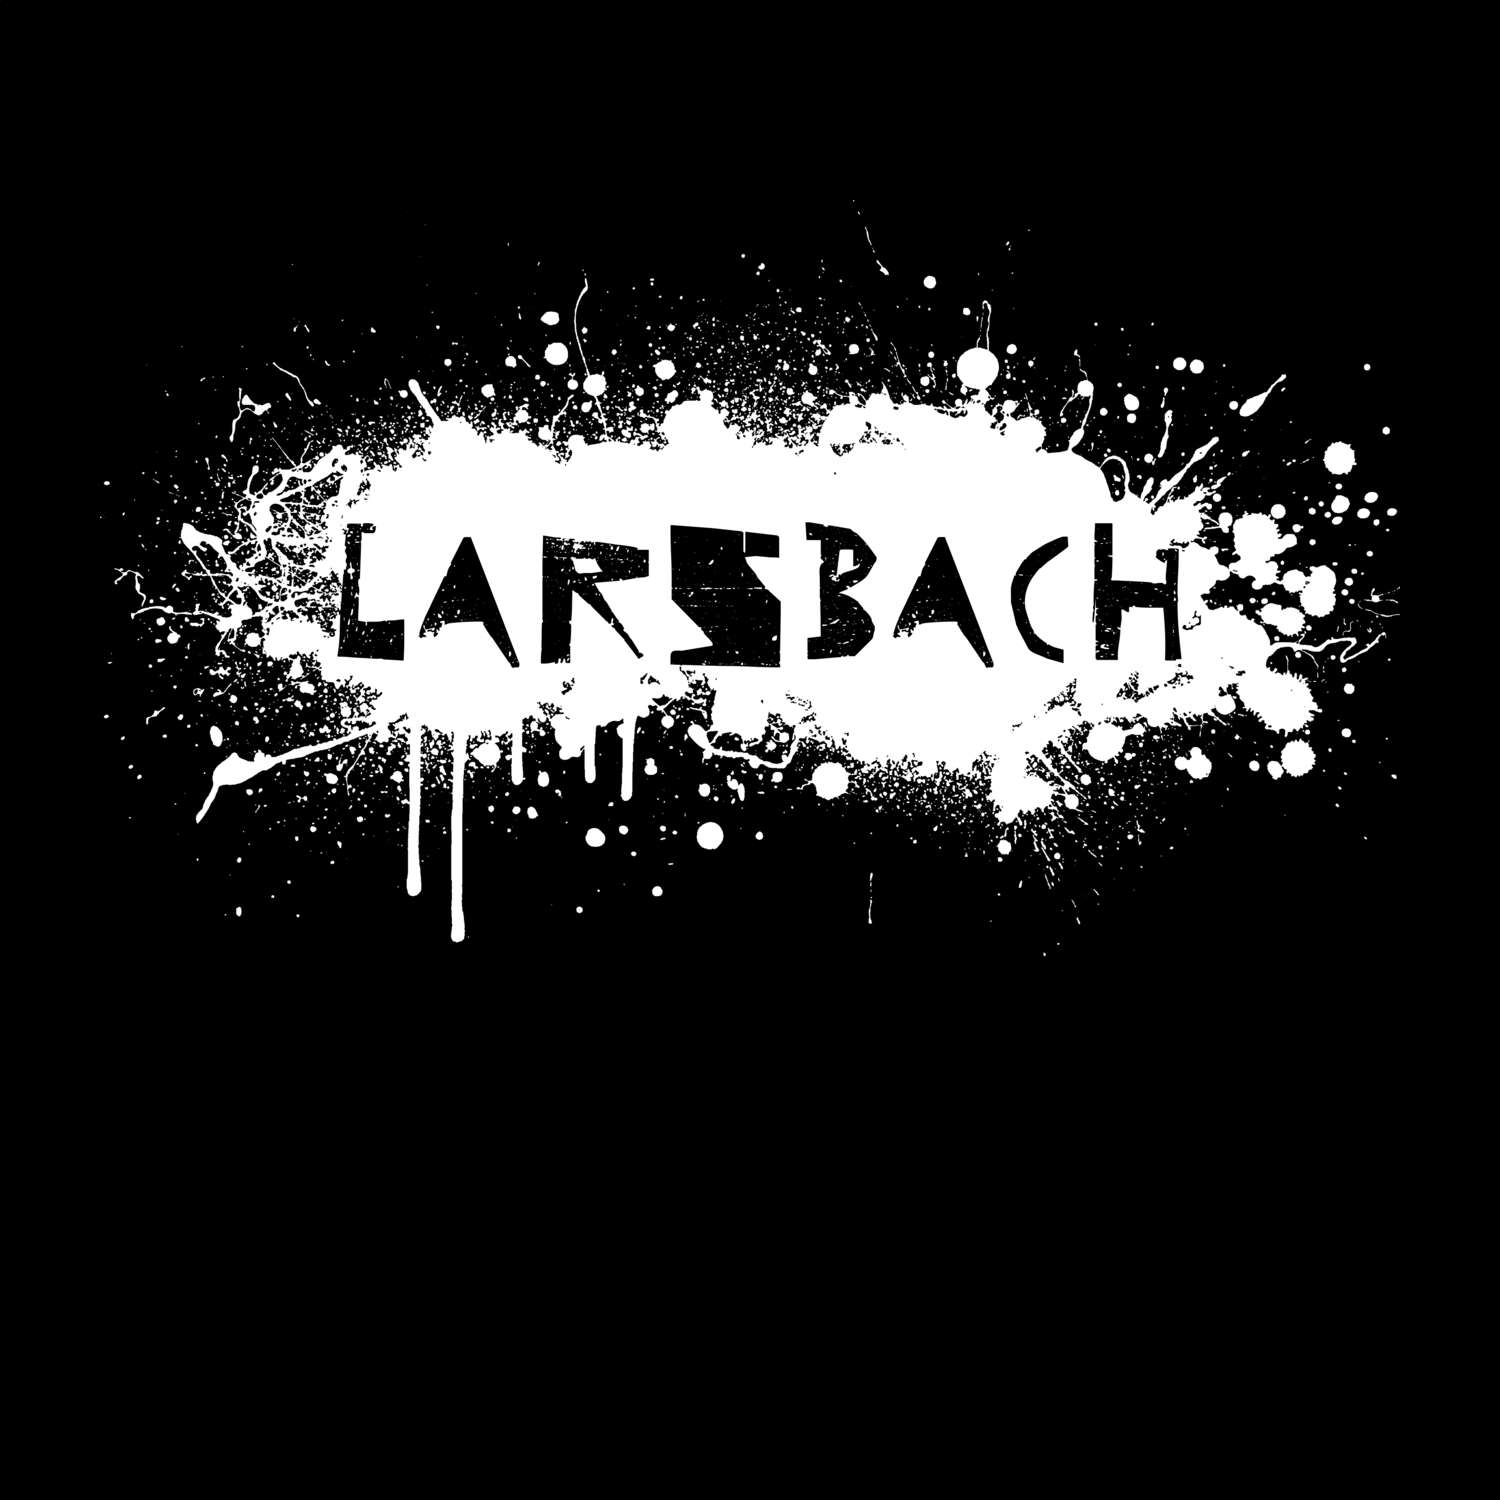 Larsbach T-Shirt »Paint Splash Punk«